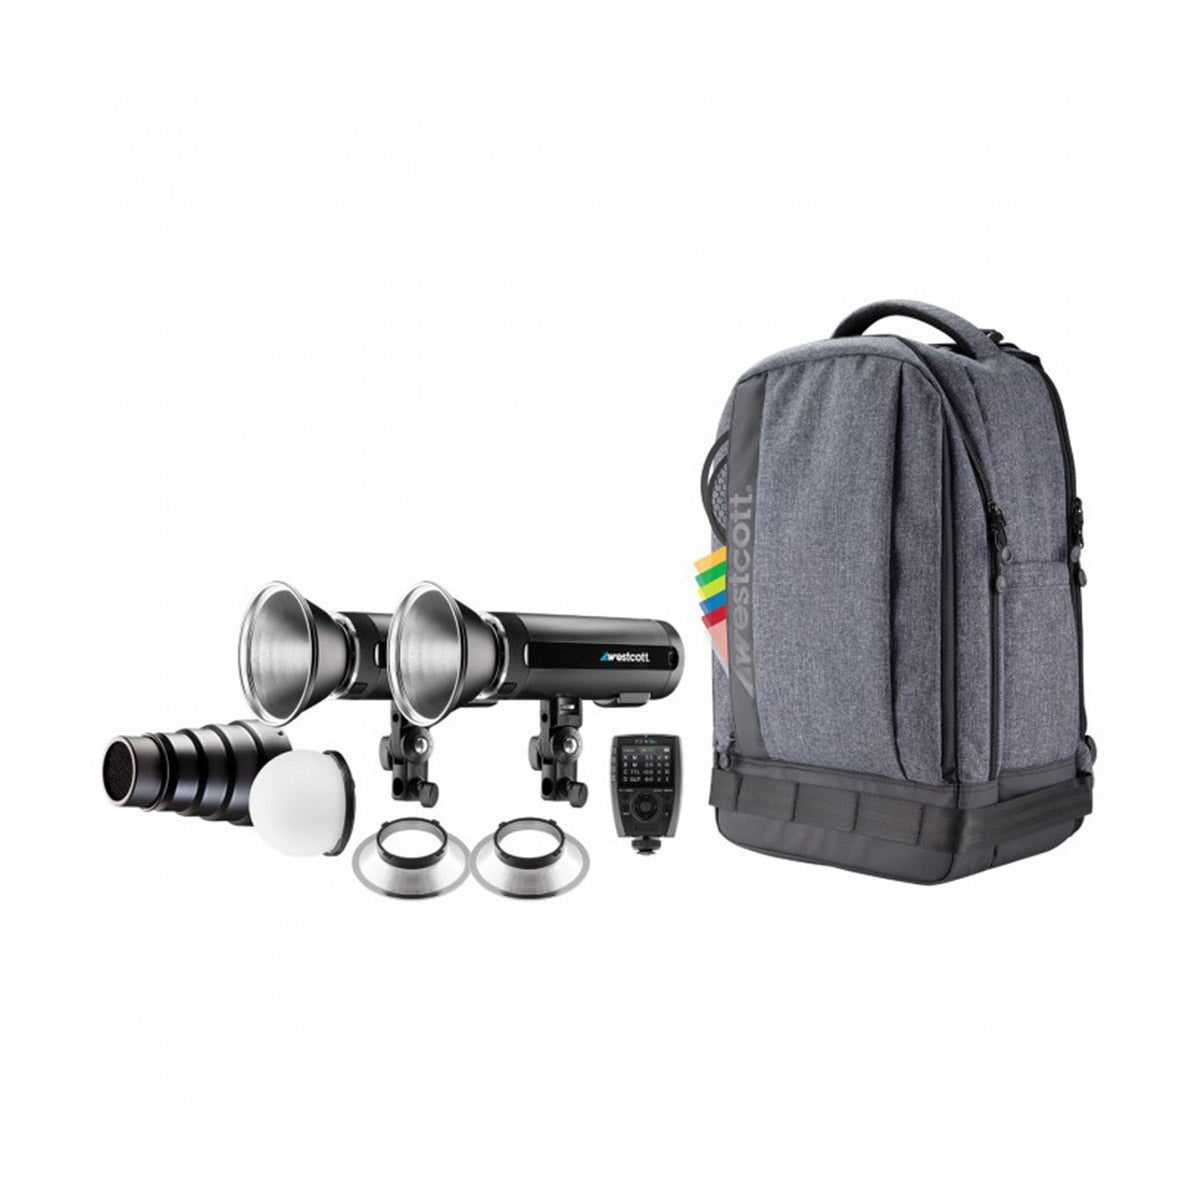 Westcott FJ200 Strobe 2-Light Backpack Kit with FJ-X3 M Universal Wireless Trigger